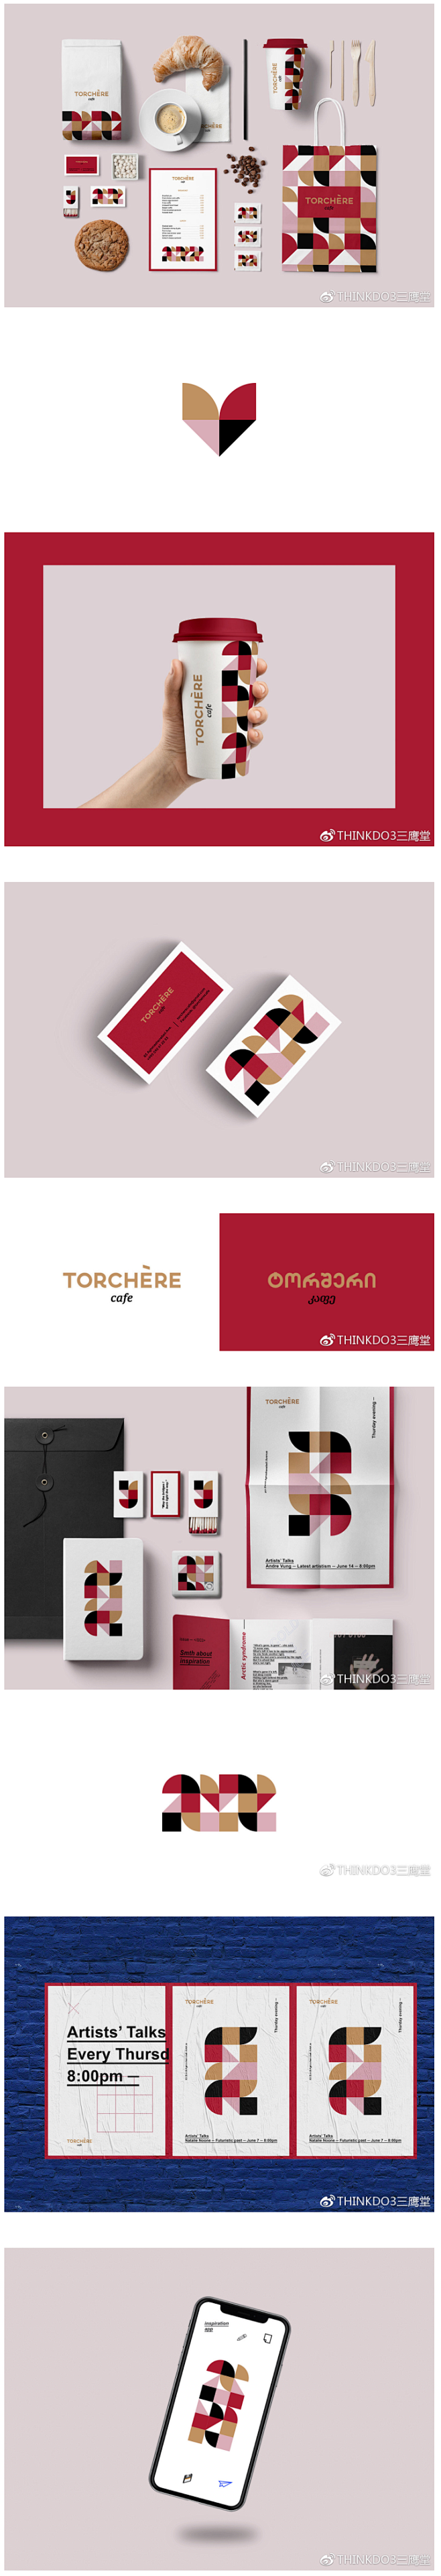 Torchere咖啡馆品牌VI视觉设计